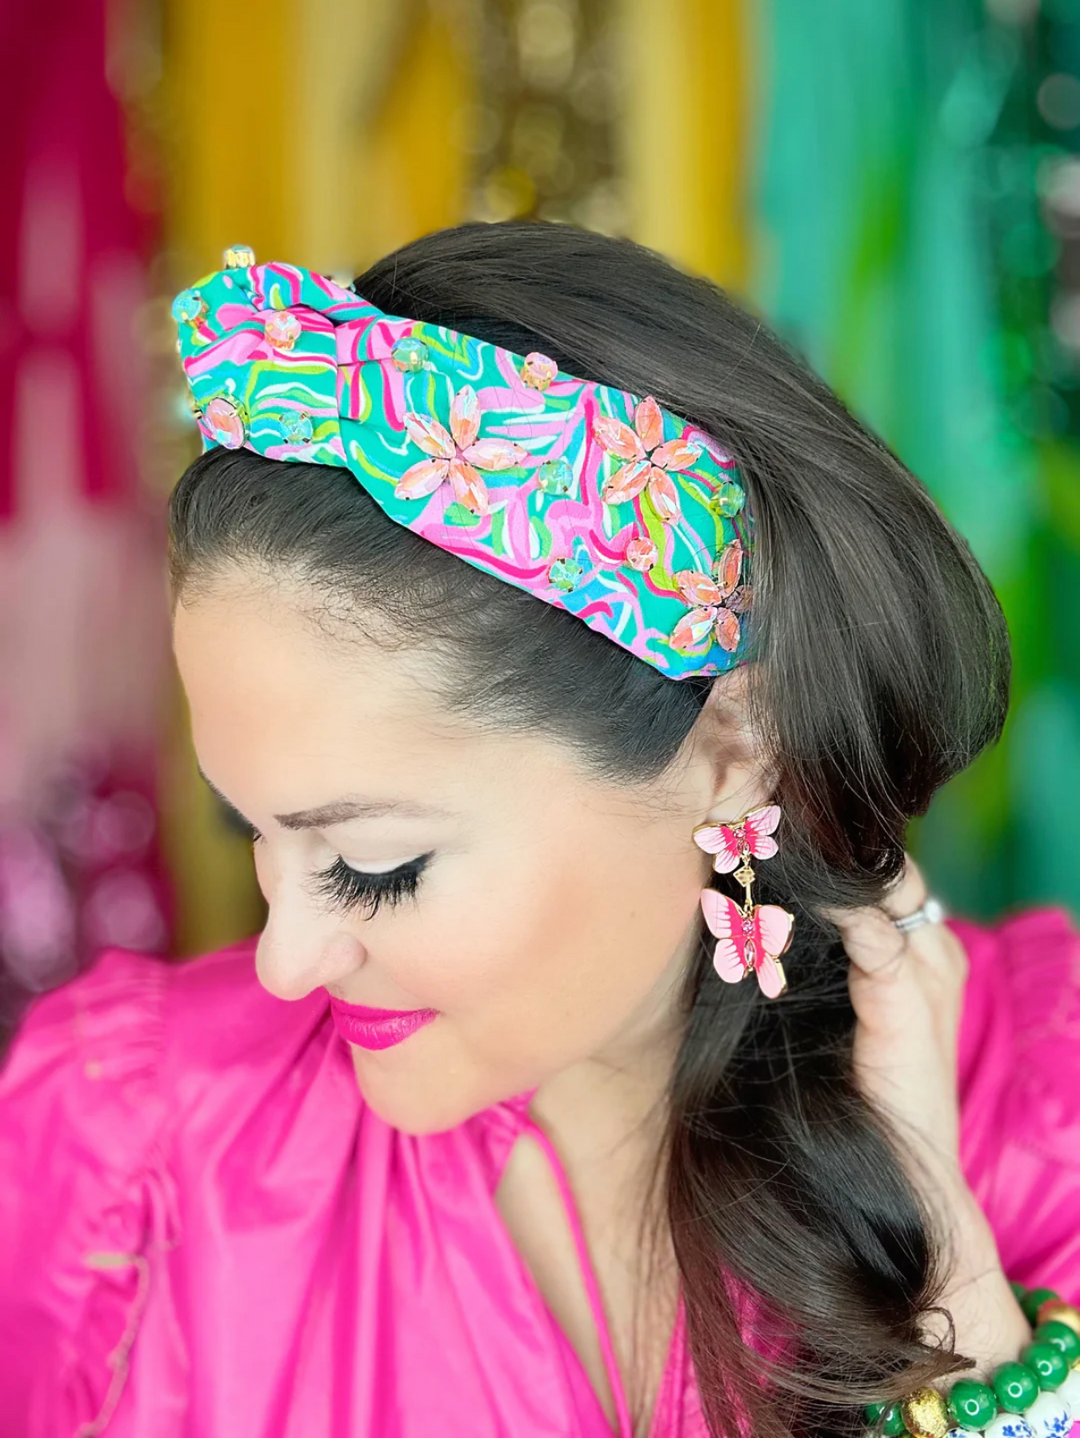 Brianna Cannon Headband - Bright Spring Floral & Pink Flower Crystals